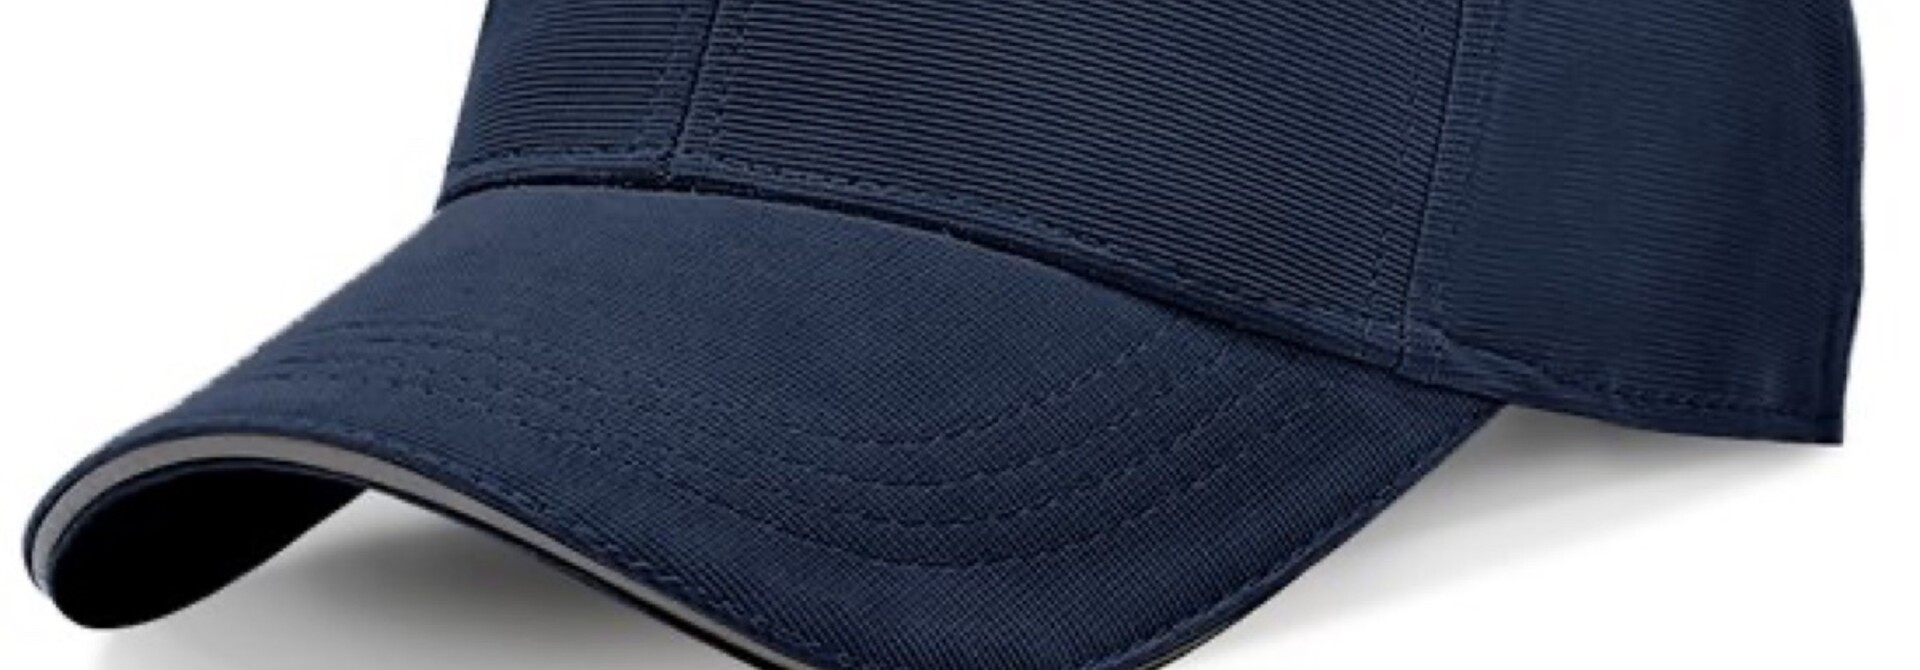 Baseball Cap -  With Reflective Edge - Adjustable Fit Cap - Trucker Hat - Head Circumference 55-60 CM - Unisex - Blue